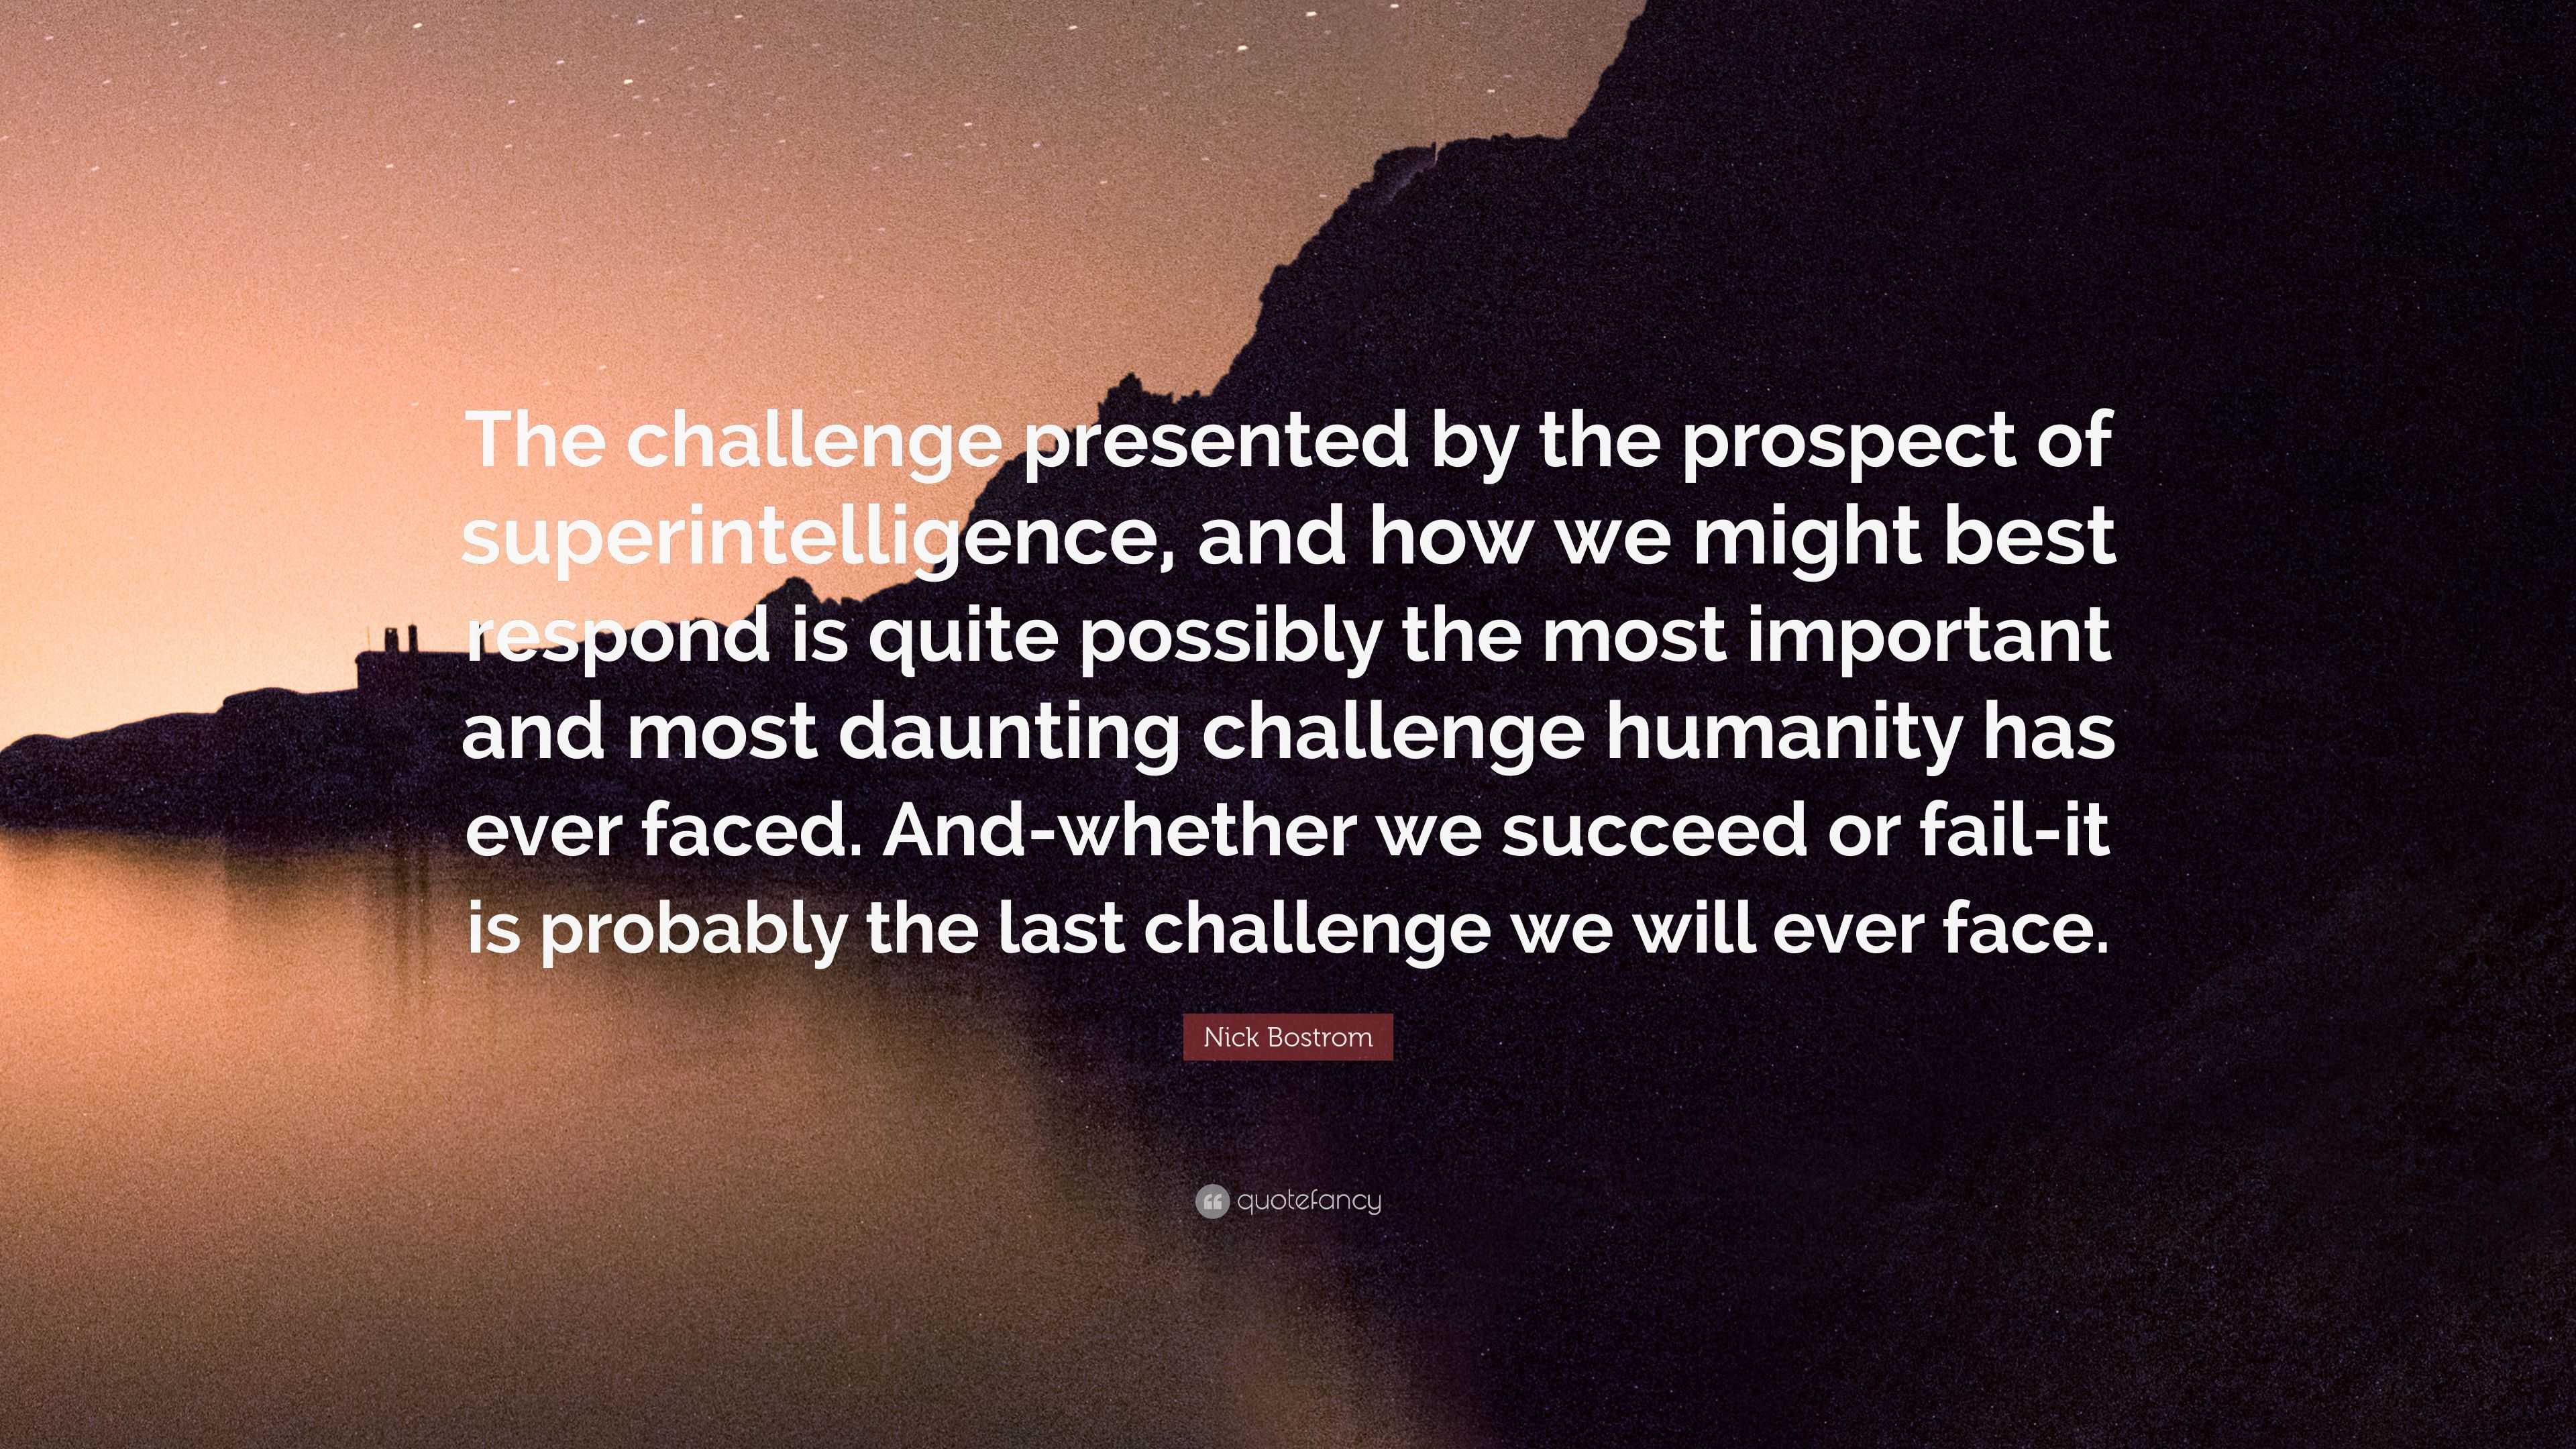 Superintelligence by Nick Bostrom